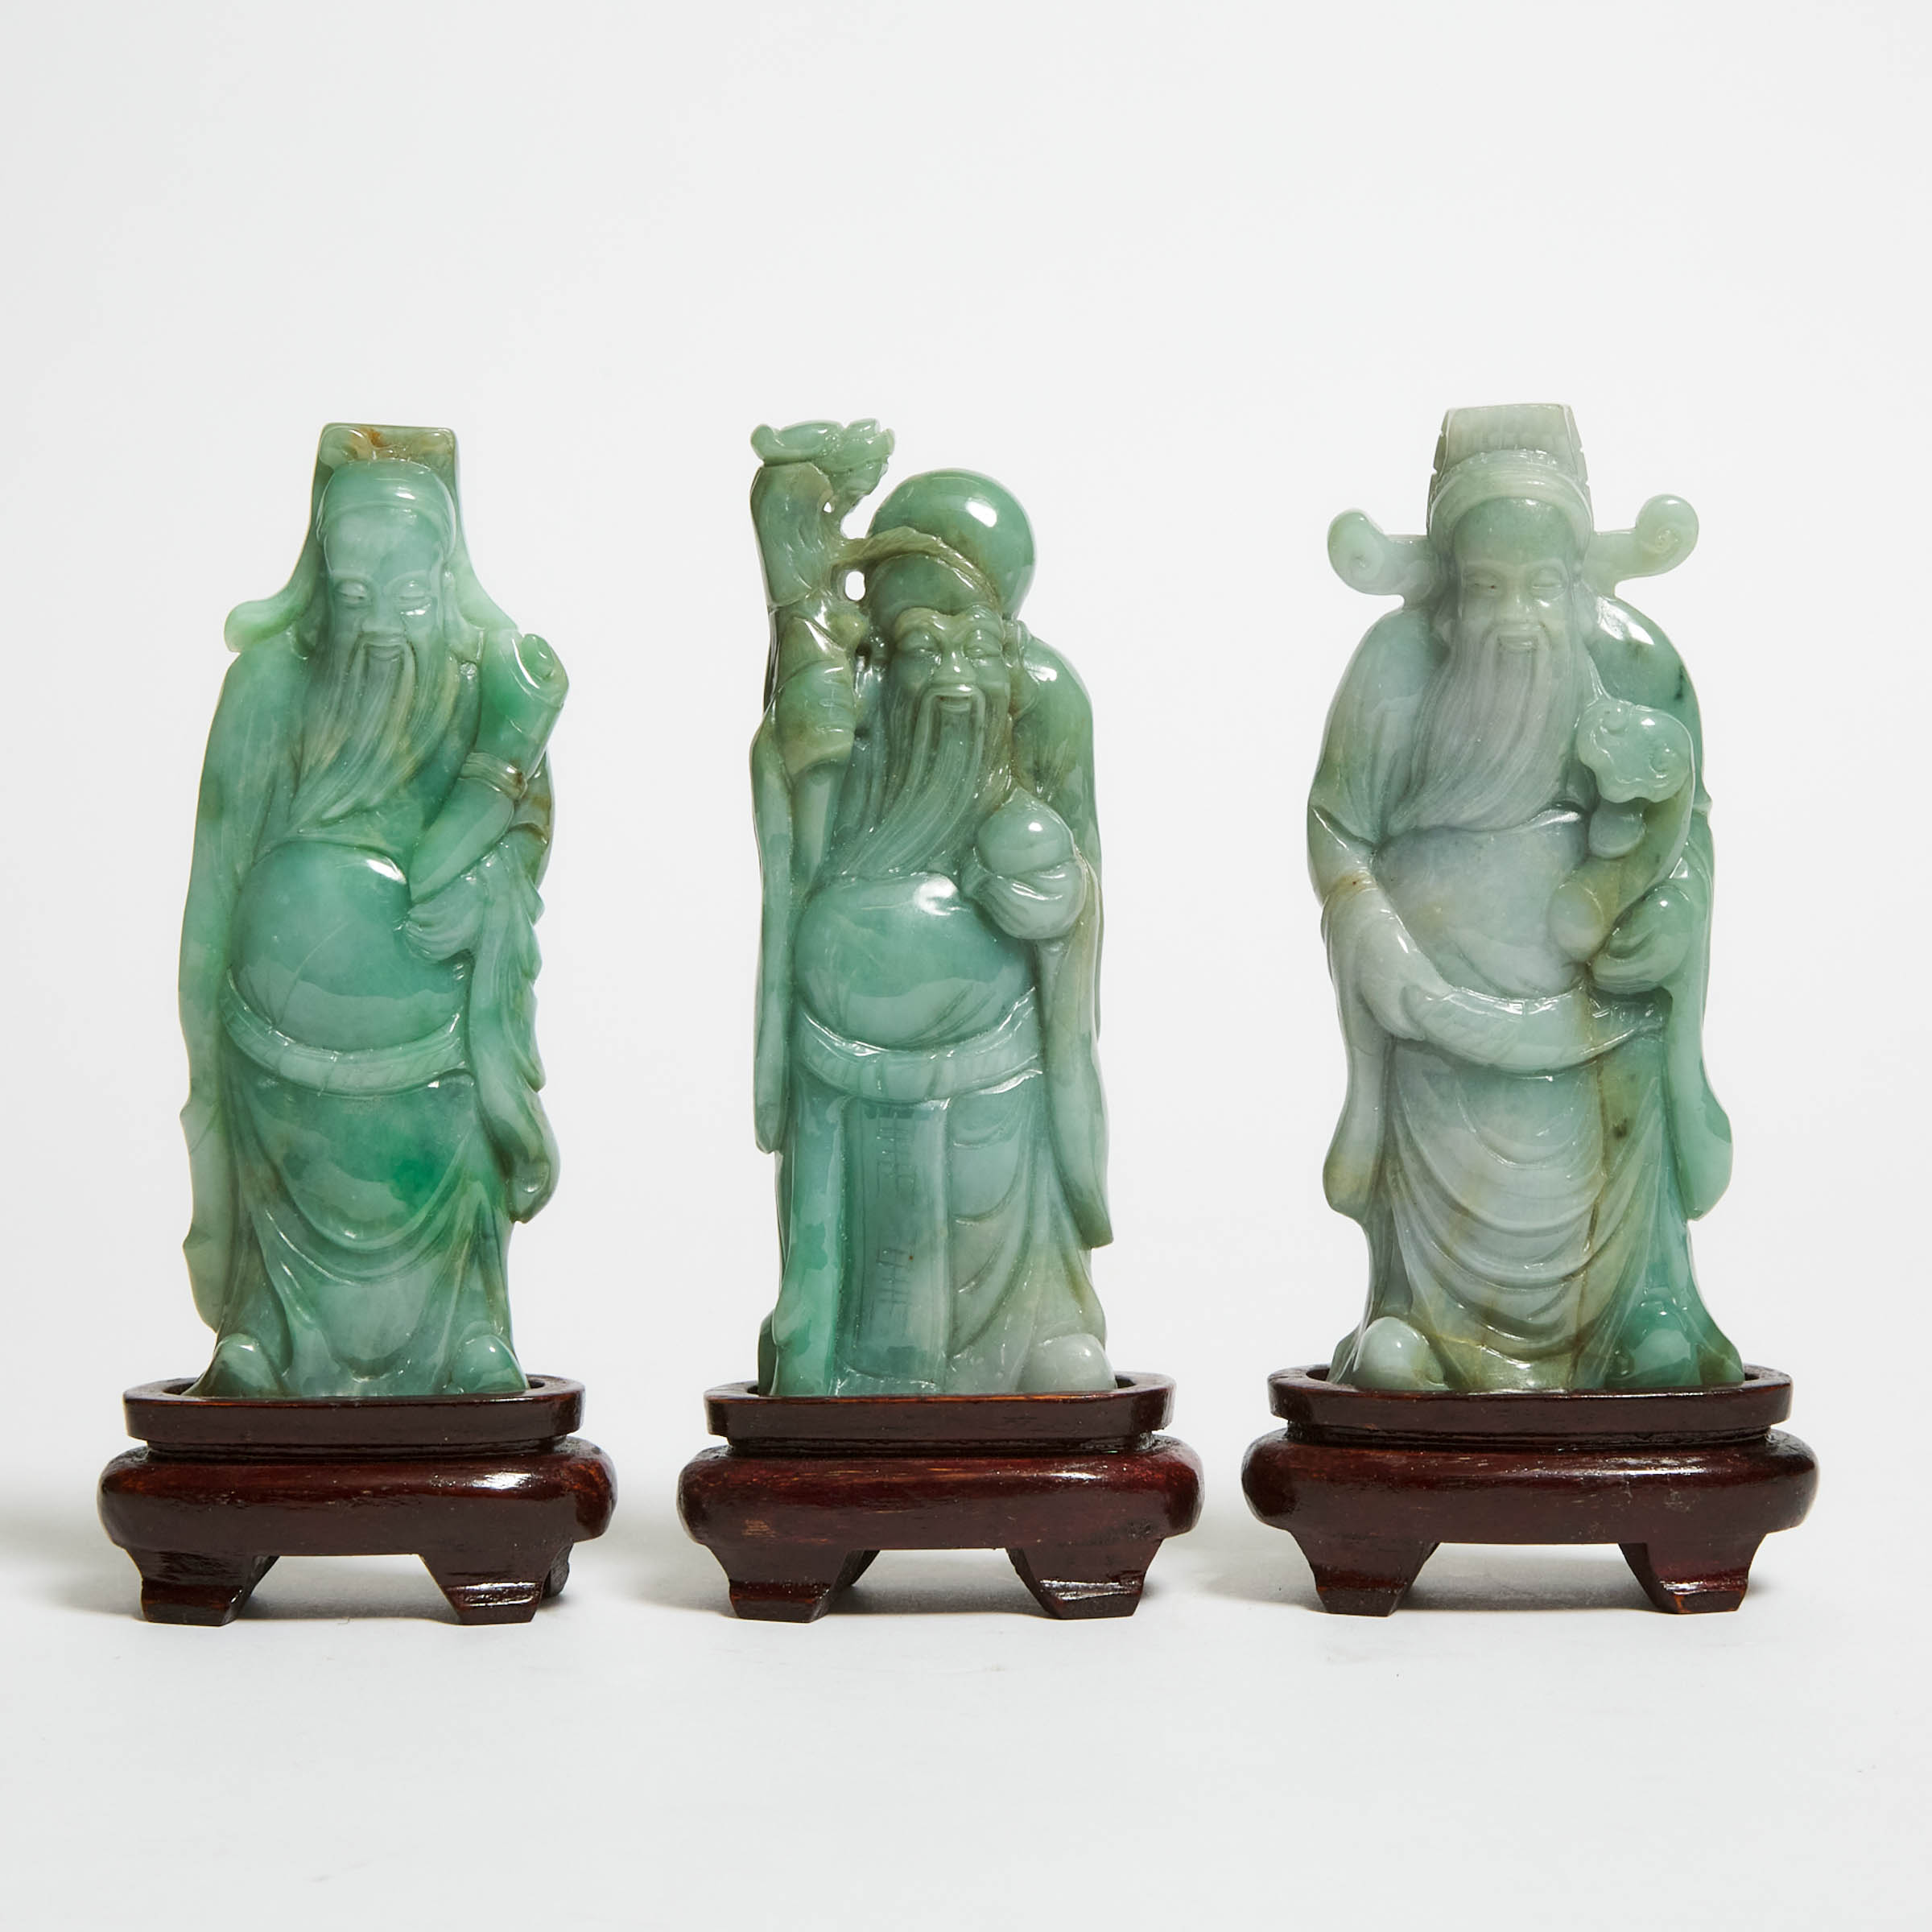 A Set of Three Jadeite Figures